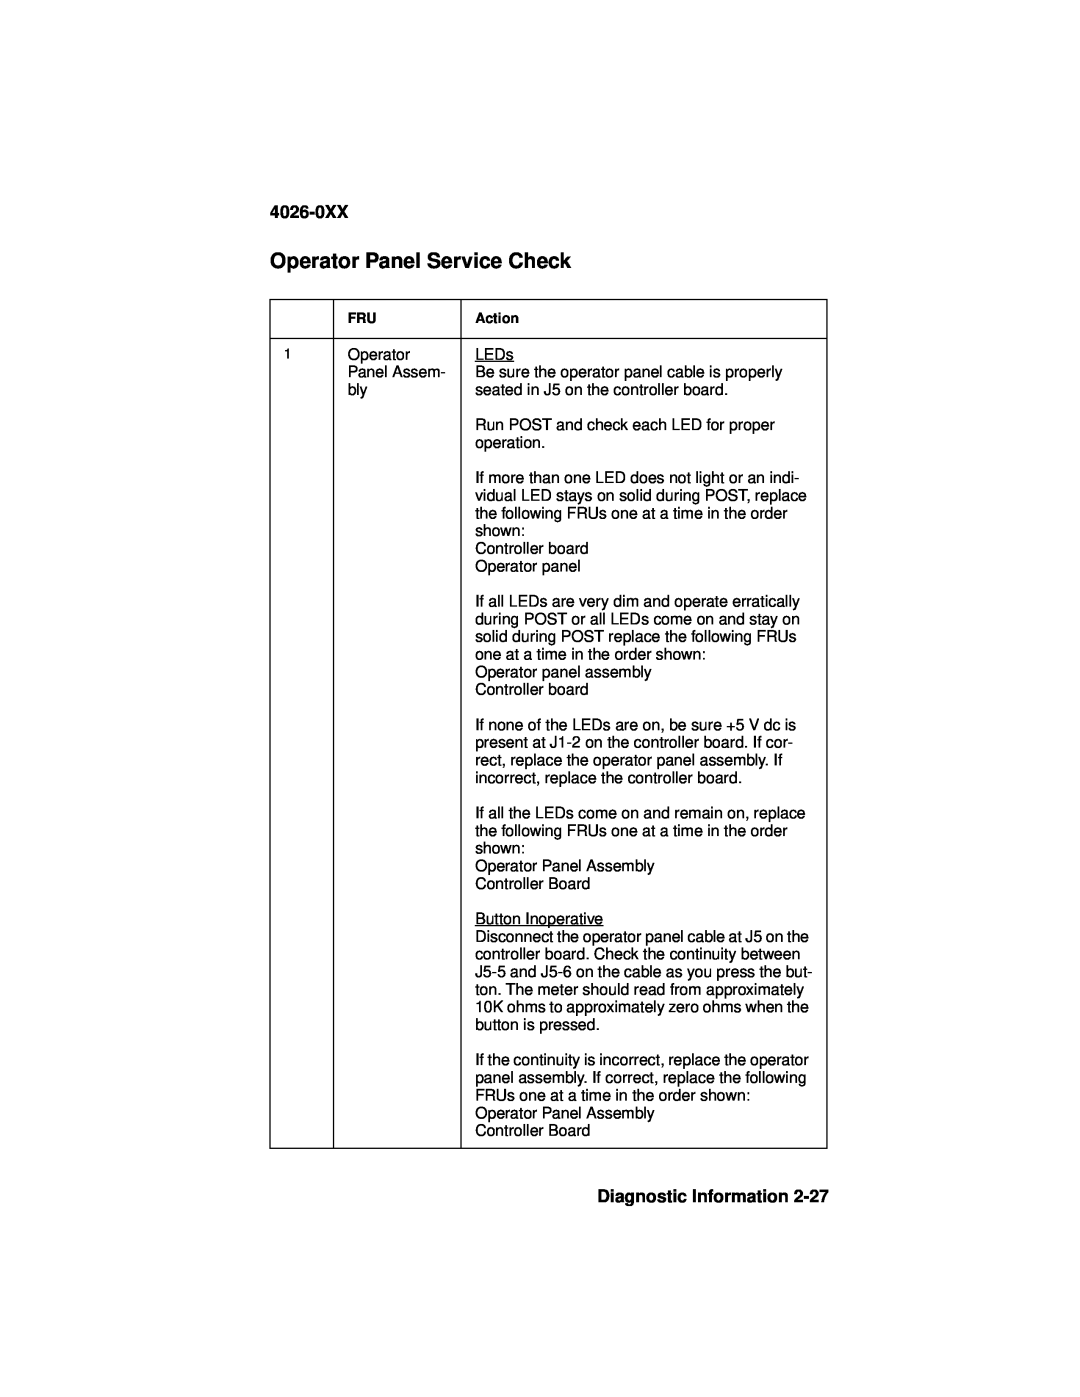 Lexmark OptraTM manual Operator Panel Service Check, 4026-0XX, Diagnostic Information 